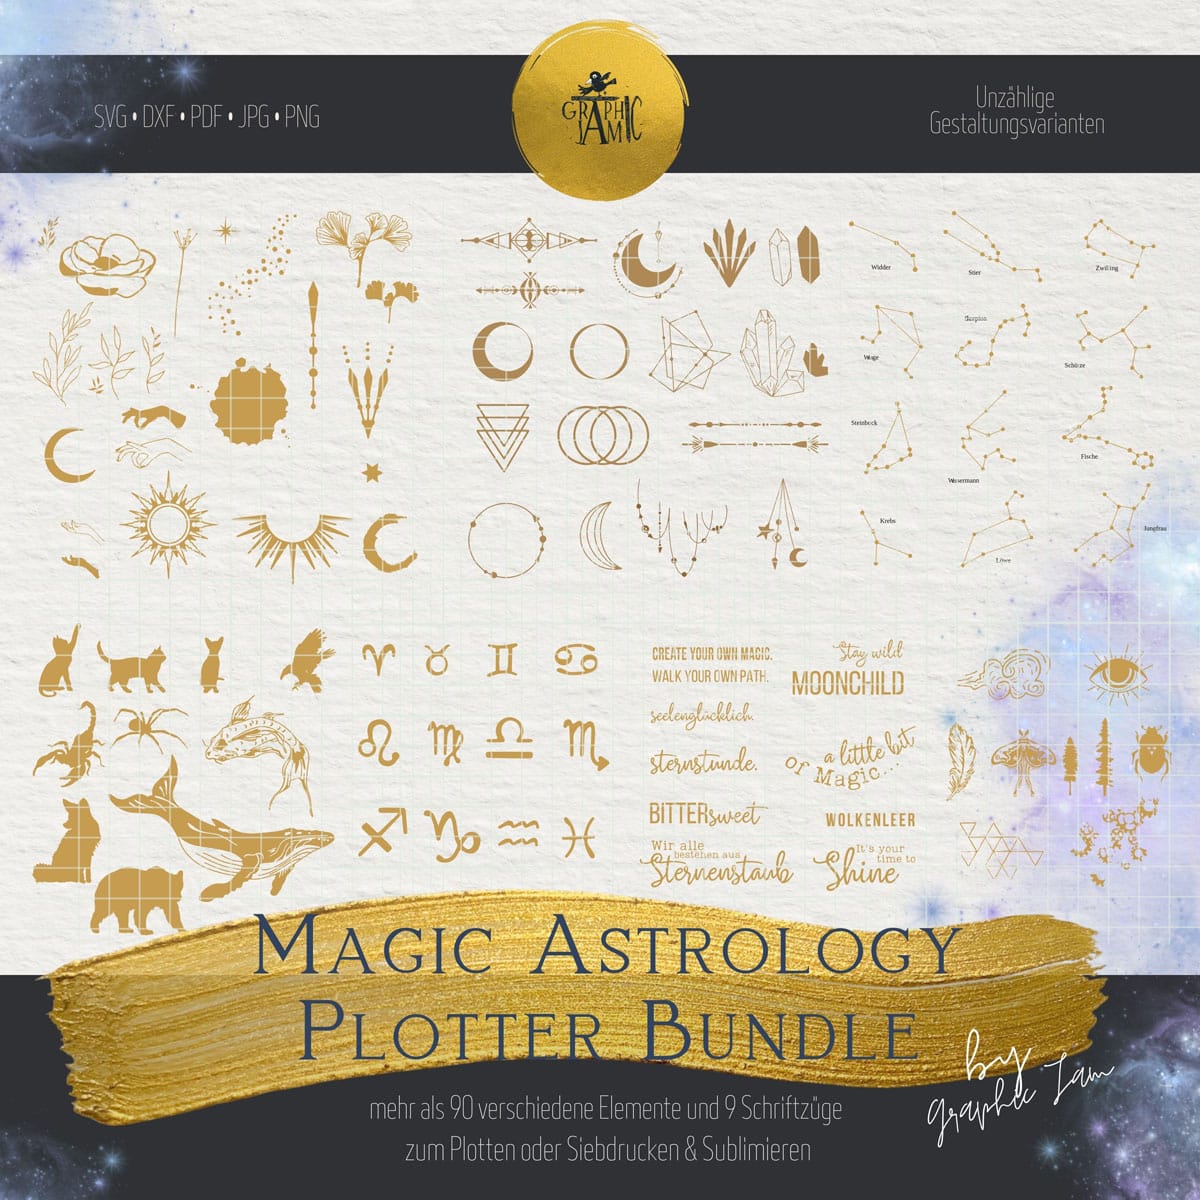 Magic Astrology Bundle Graphicjam Übersicht